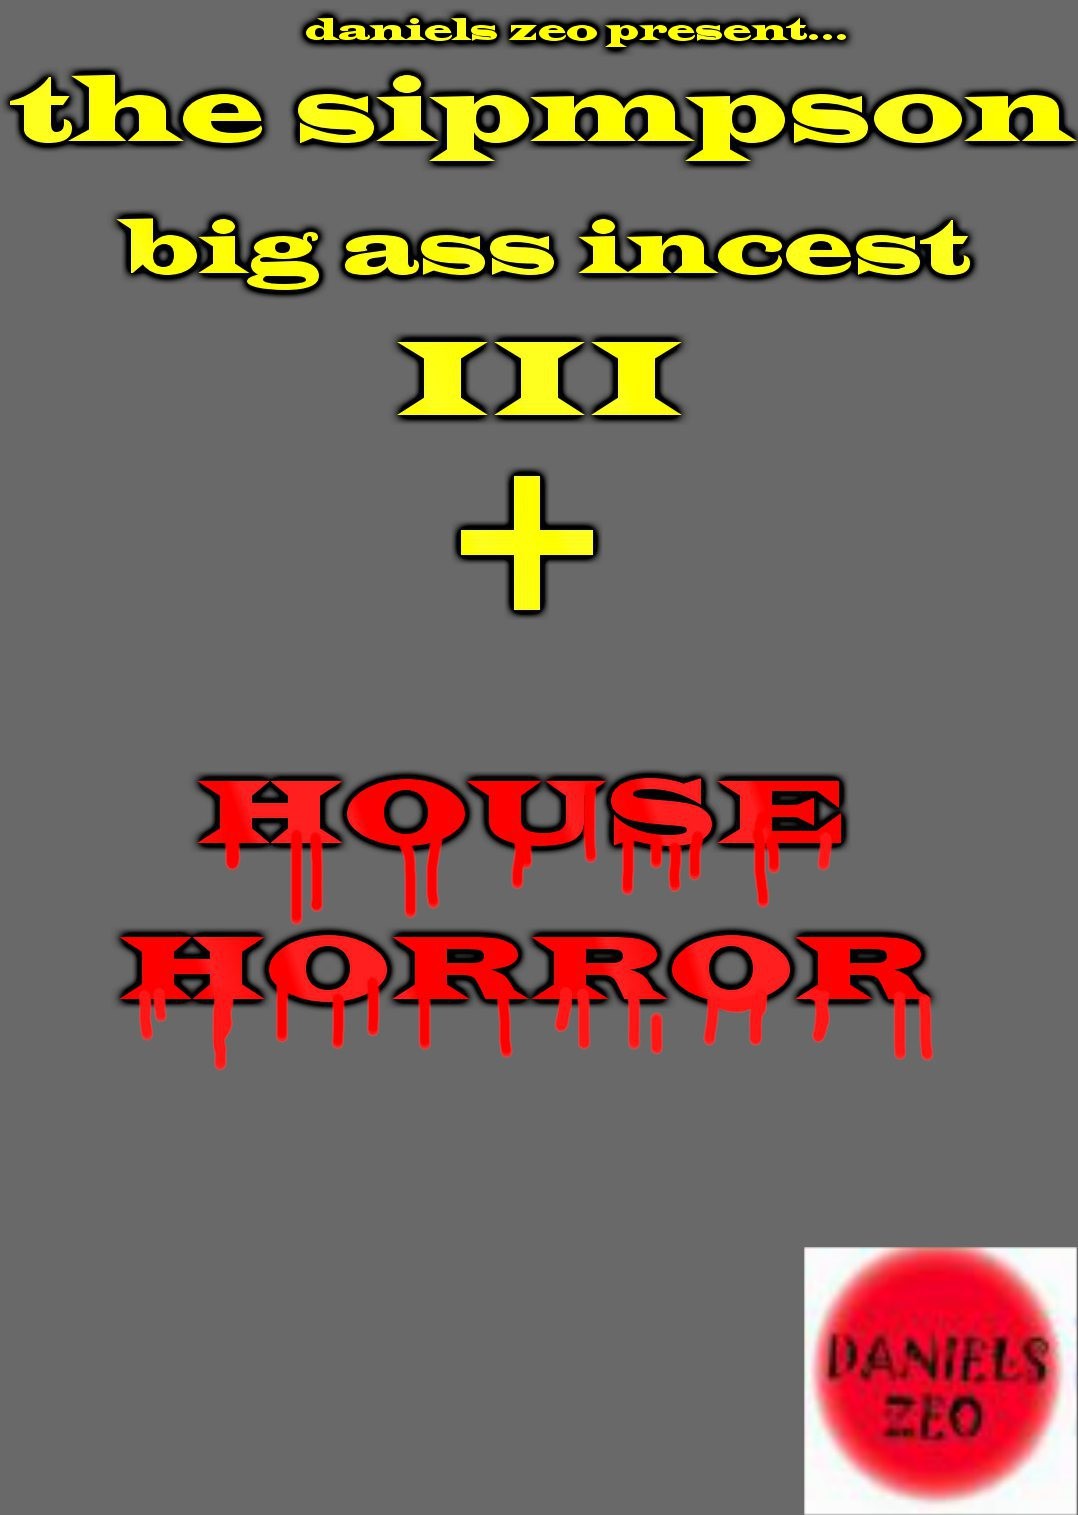 The Simpsons Big Ass Porn - Simpsons big ass incest 3- House Horror (EspaÃ±ol) ~ Ver ...